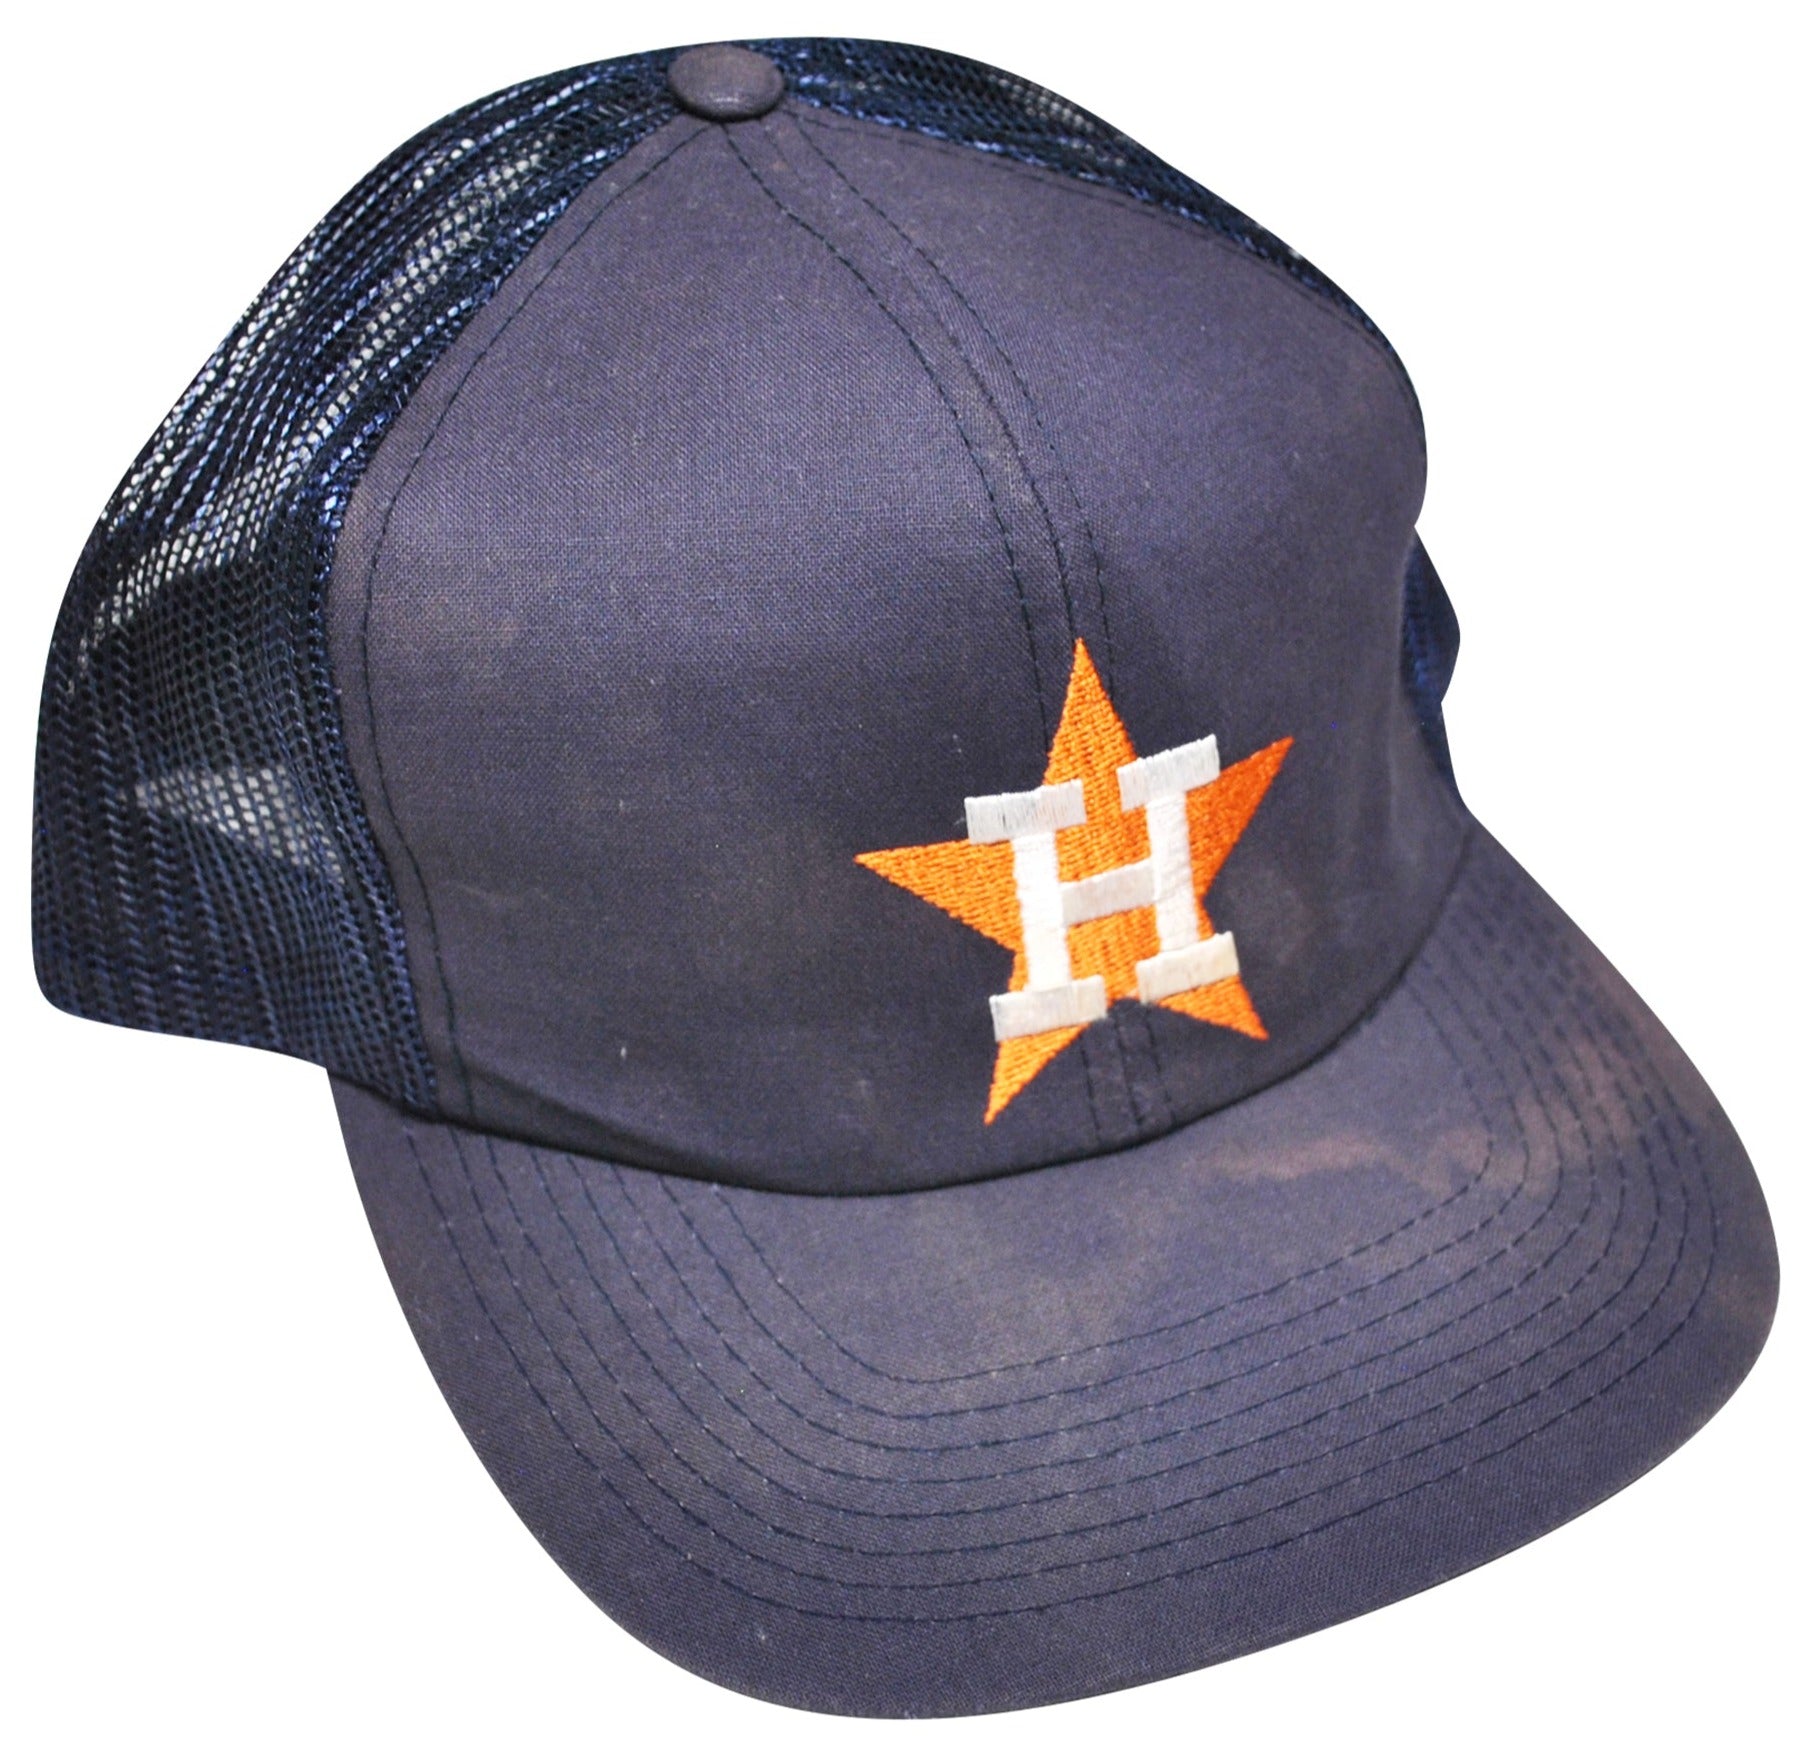 Vintage Astros Hat 